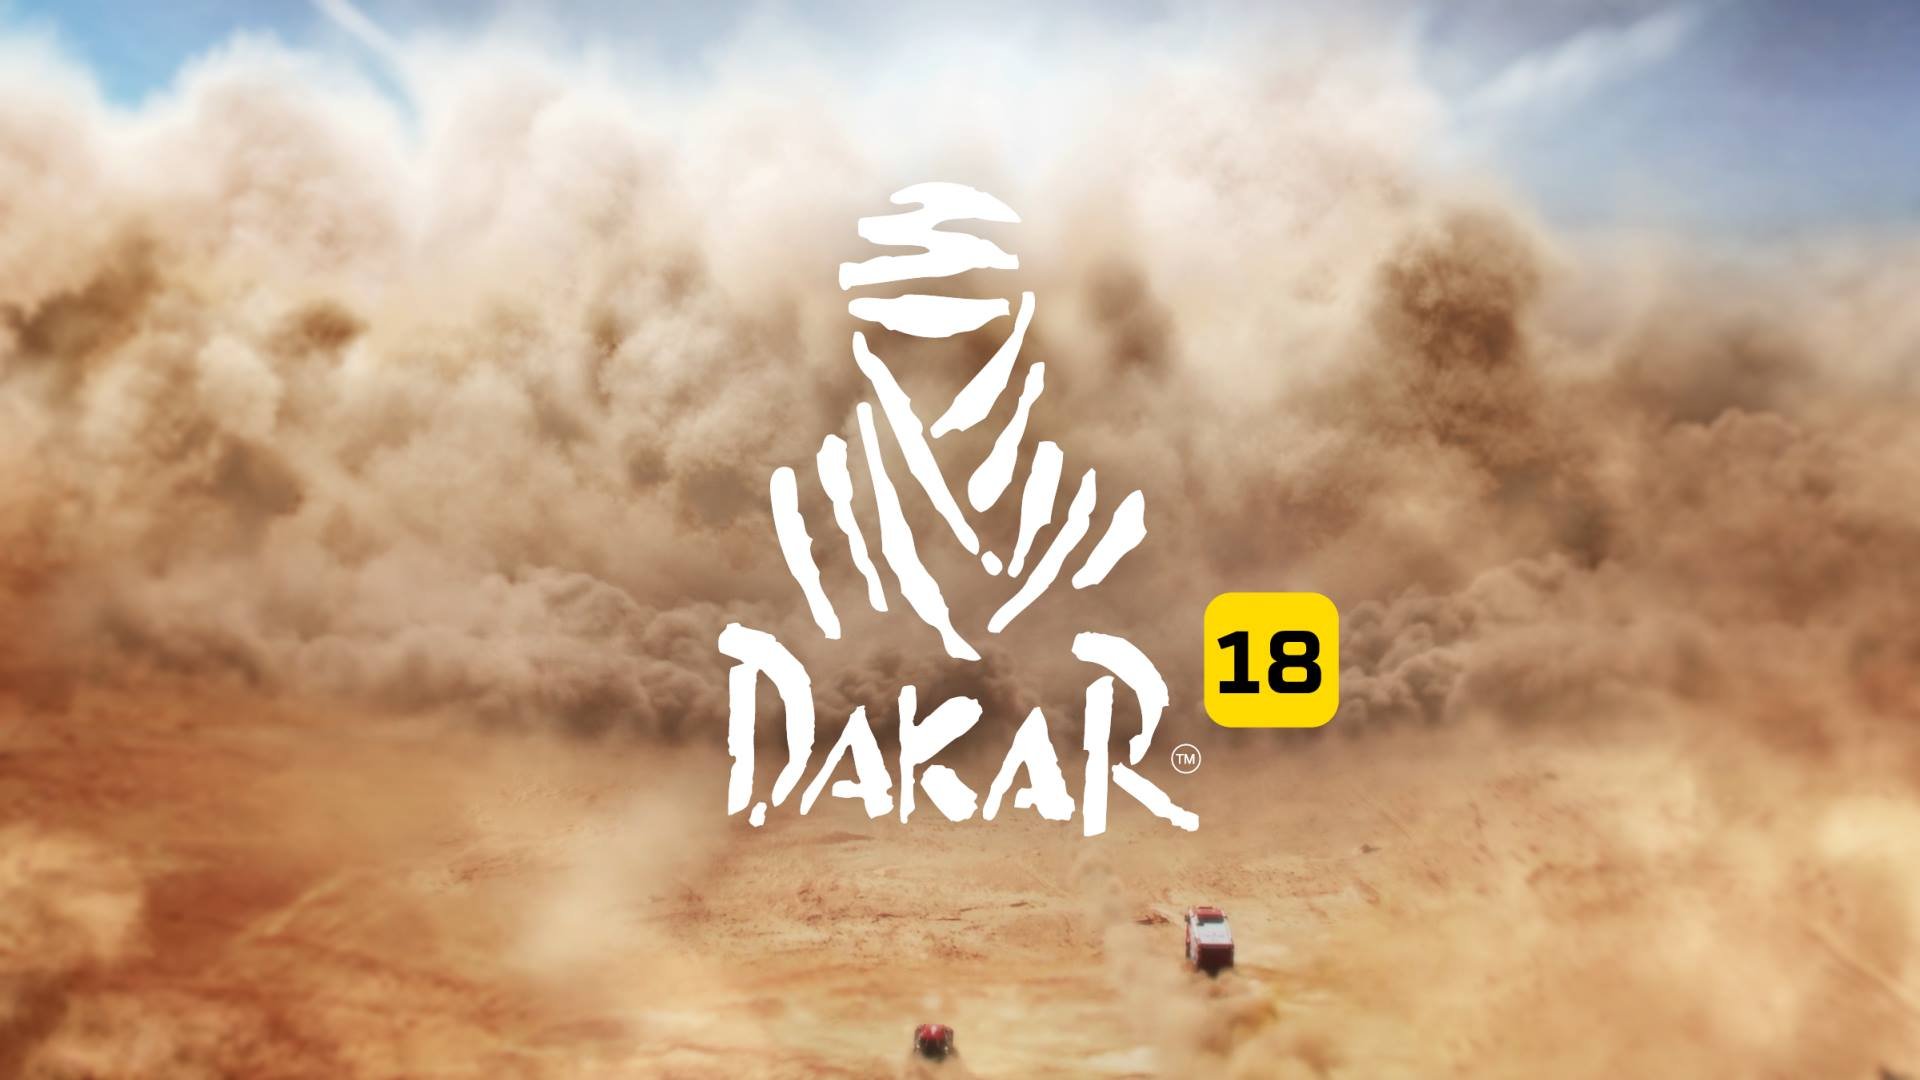 More information about "Dakar 18 è disponibile"